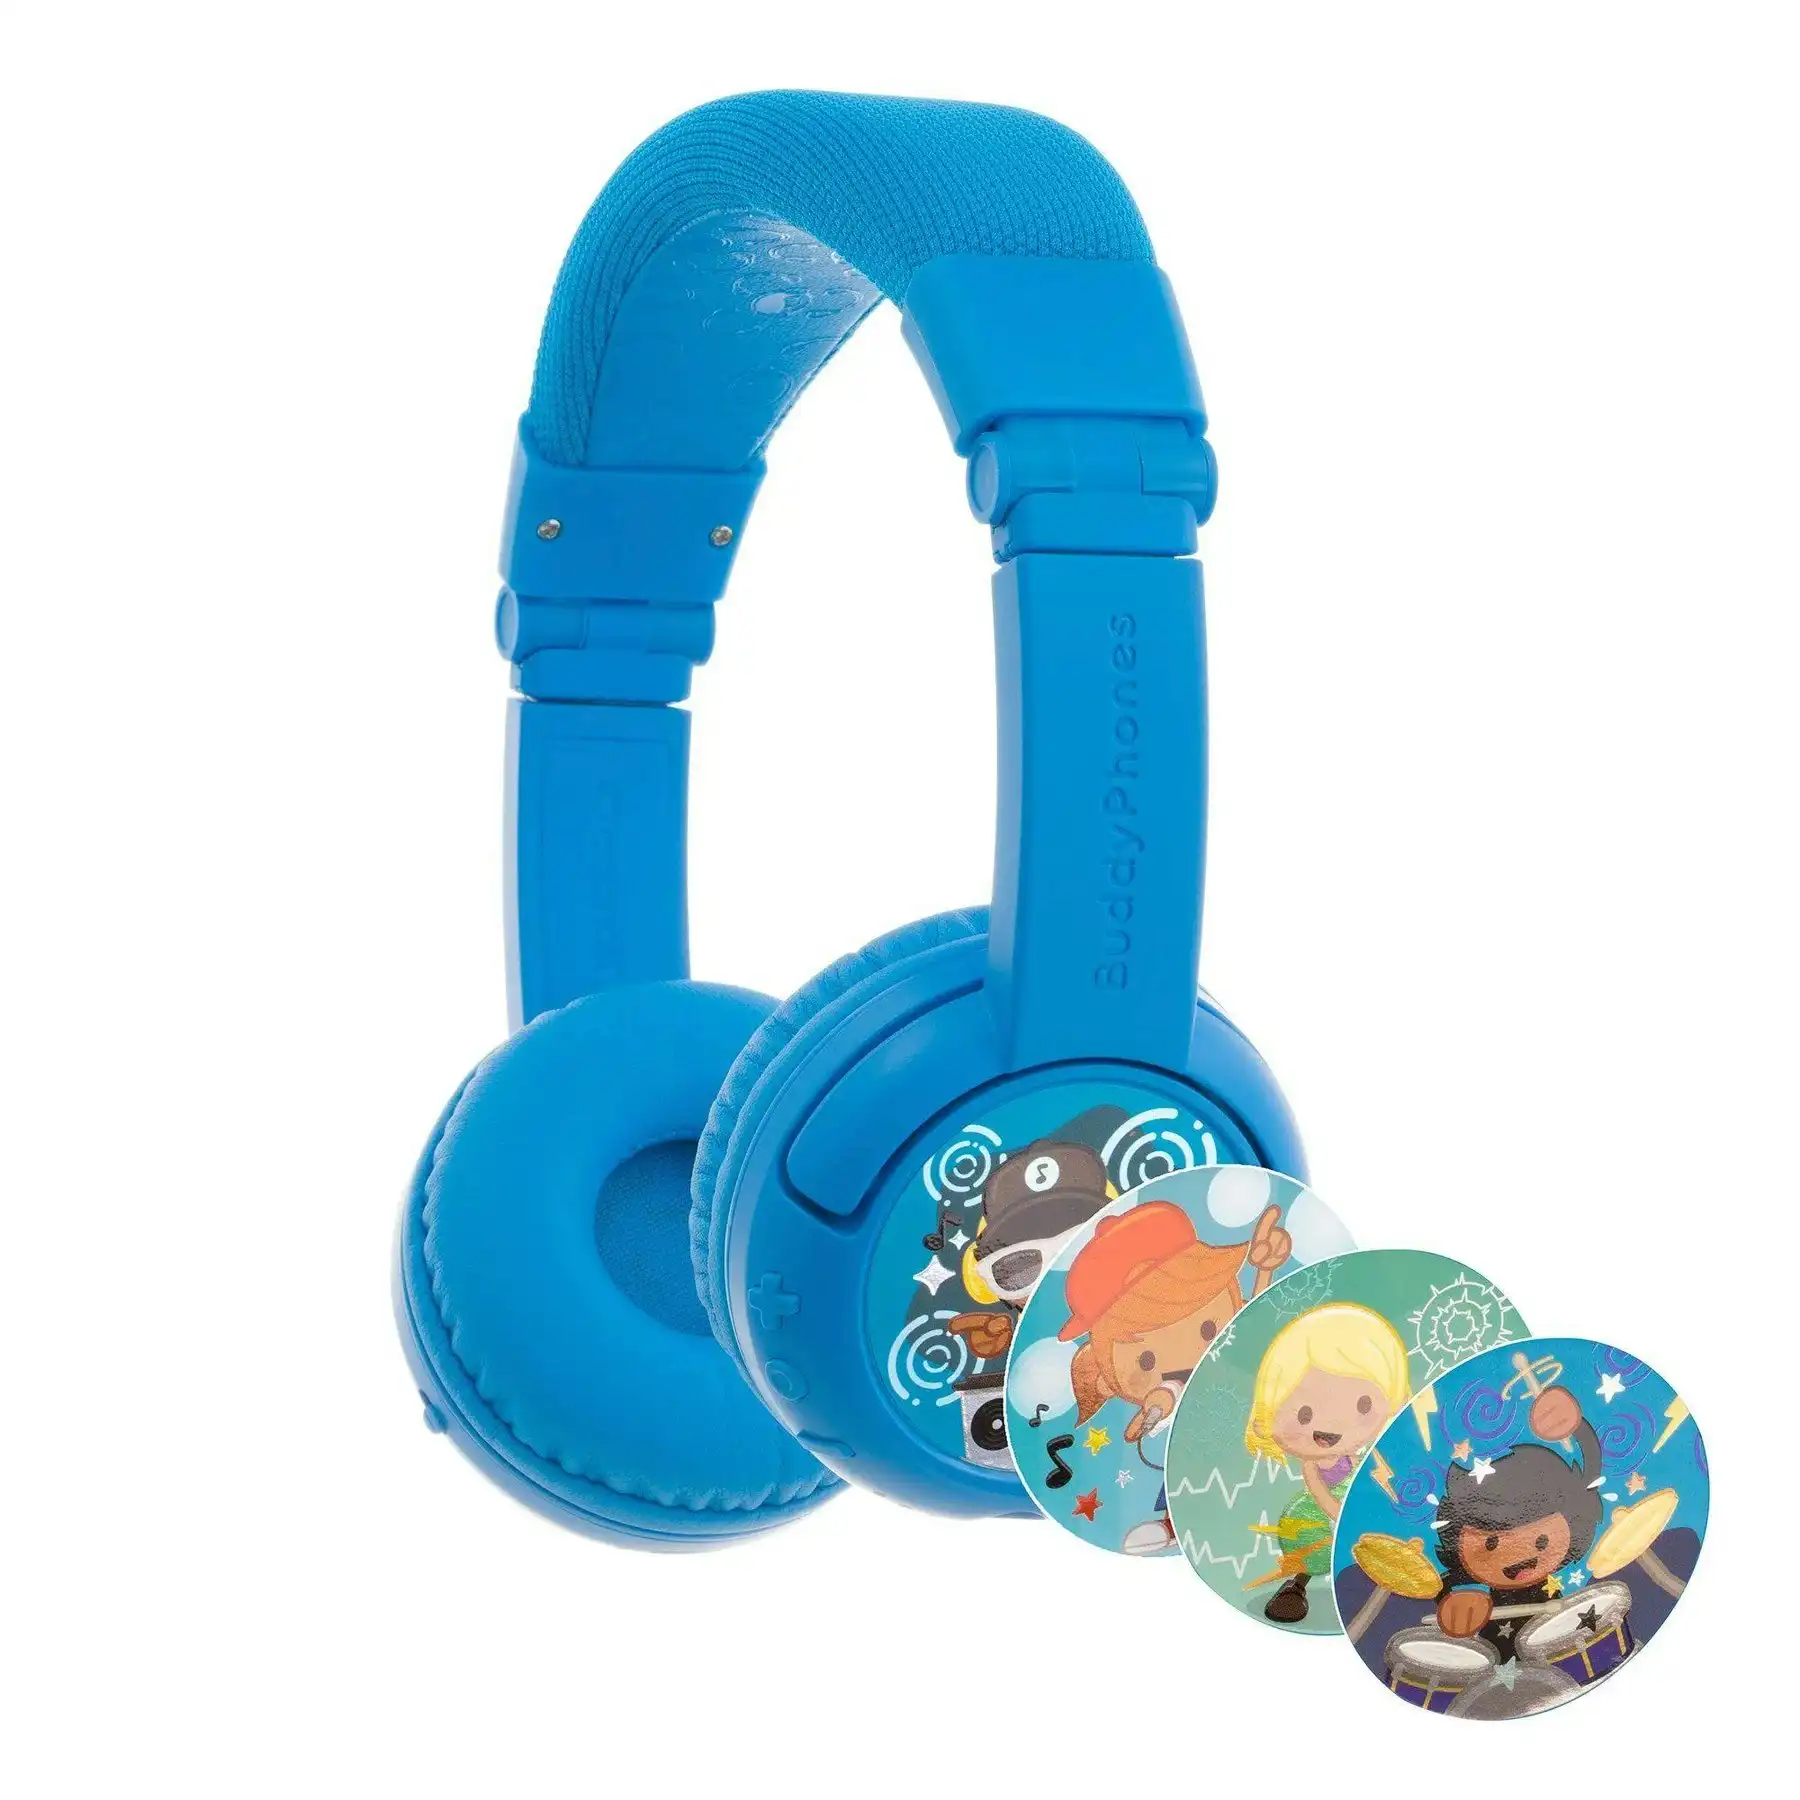 Buddyphones Play Plus Wireless Headphones - Cool Blue